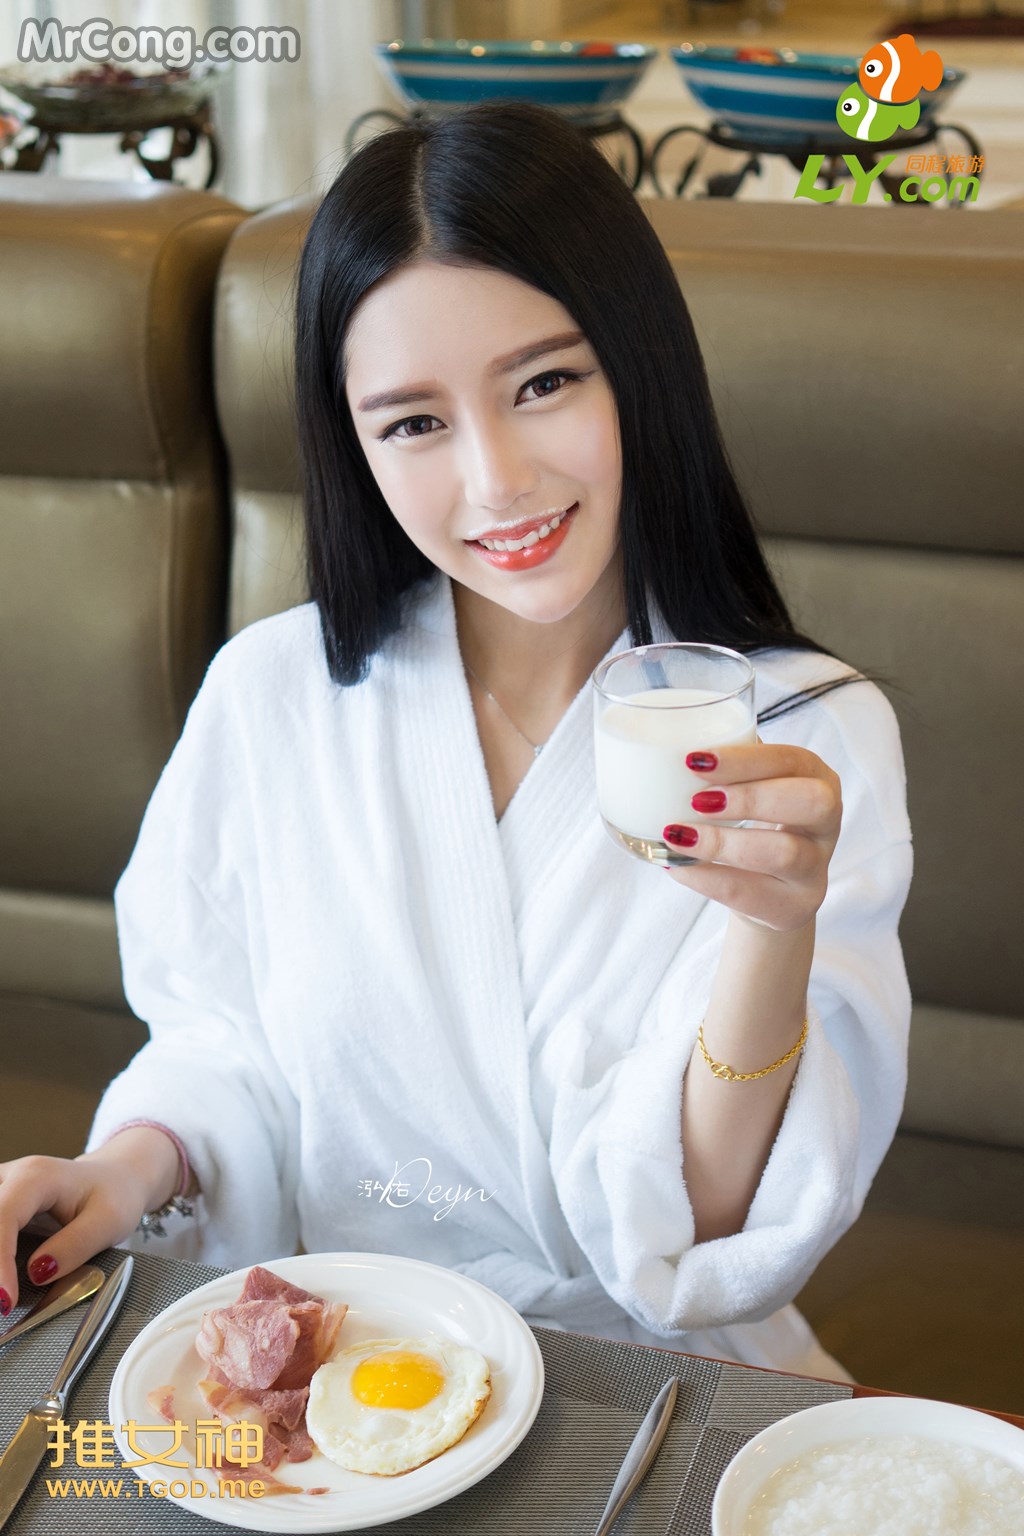 TGOD 2014-09-24: Model Xu Yan Xin (徐妍馨) (66 pictures) photo 3-12